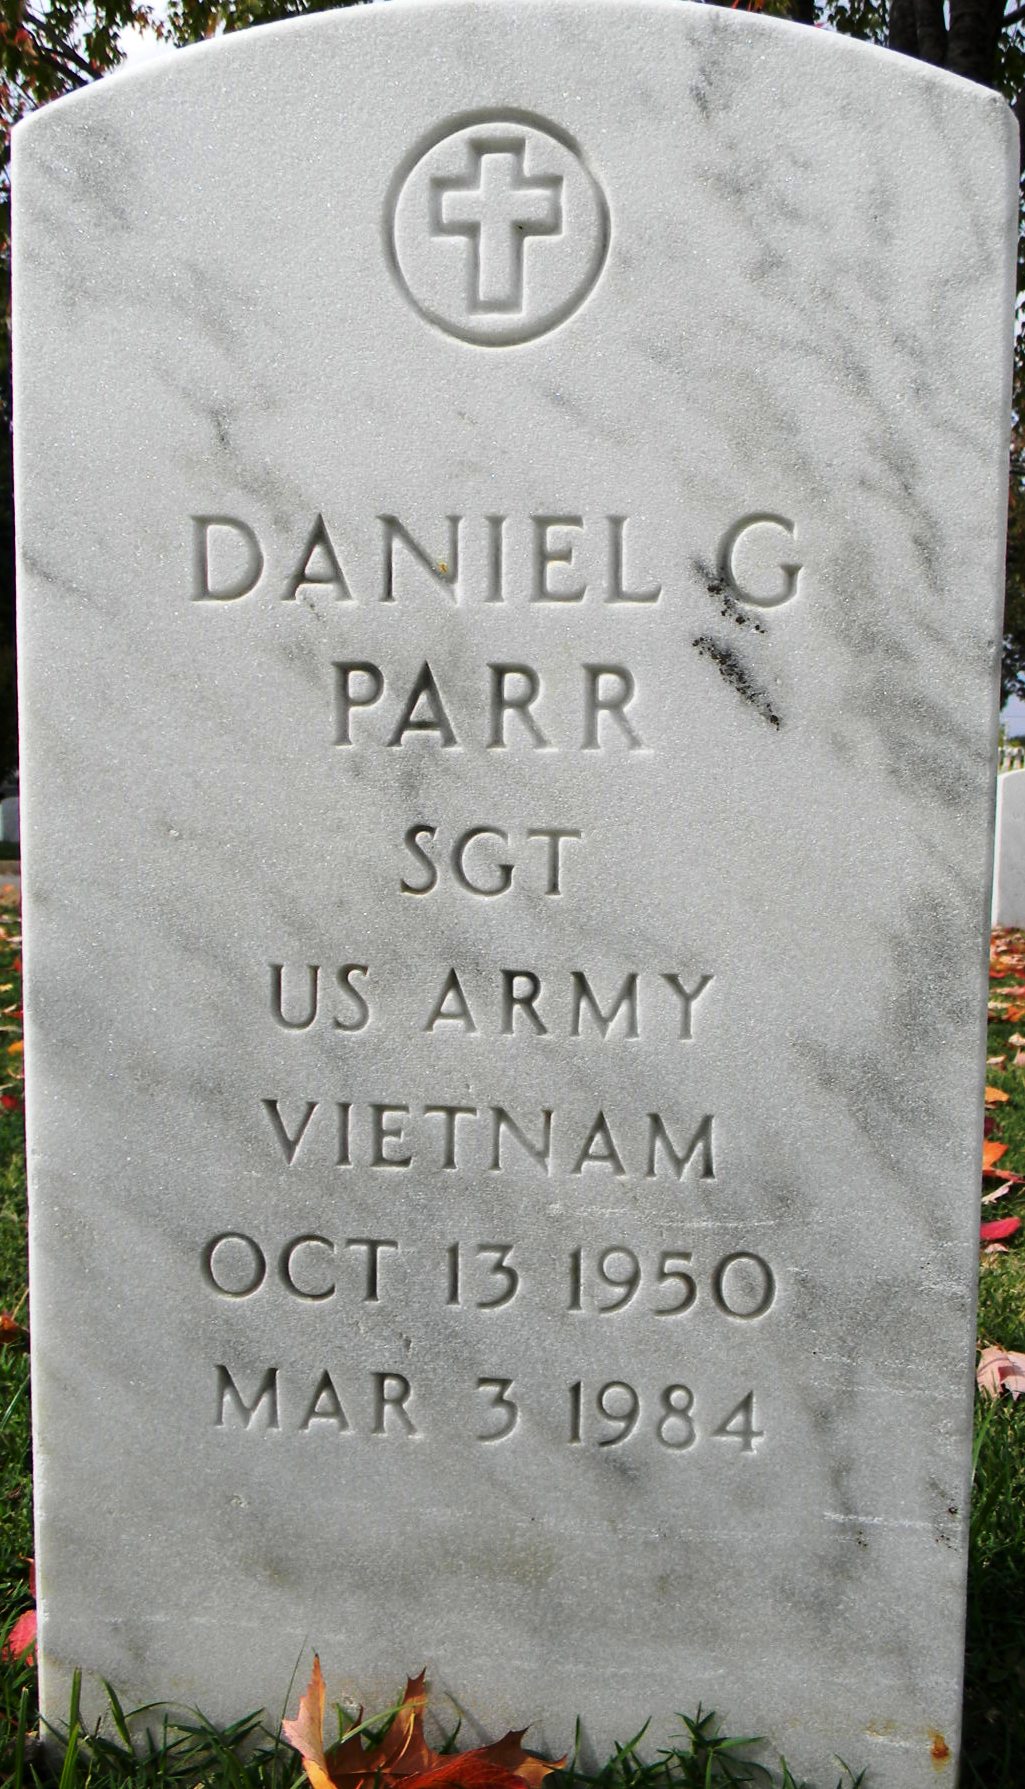 Danny's grave